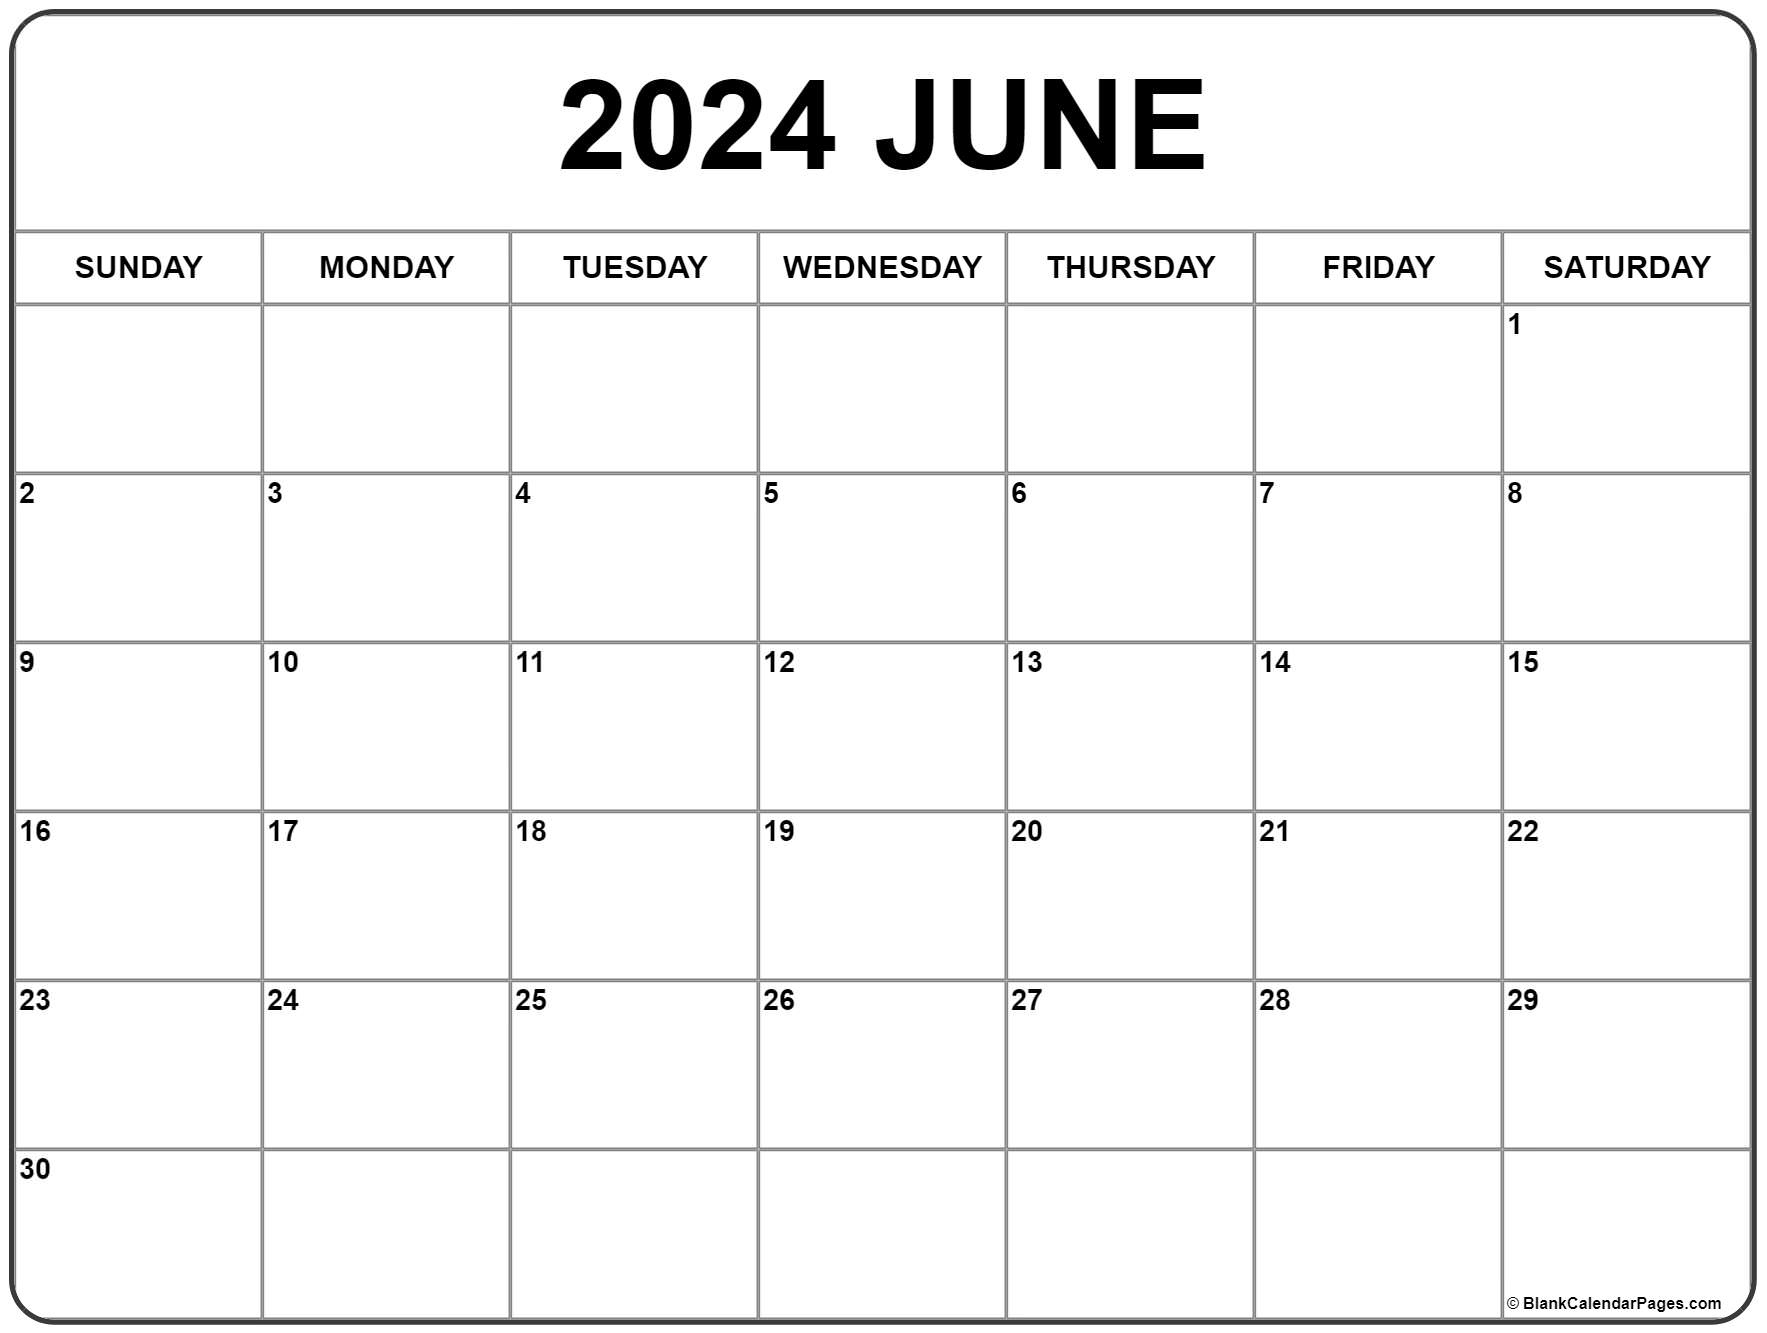 June 2024 Calendar | Free Printable Calendar inside Free Printable Calend June 2024